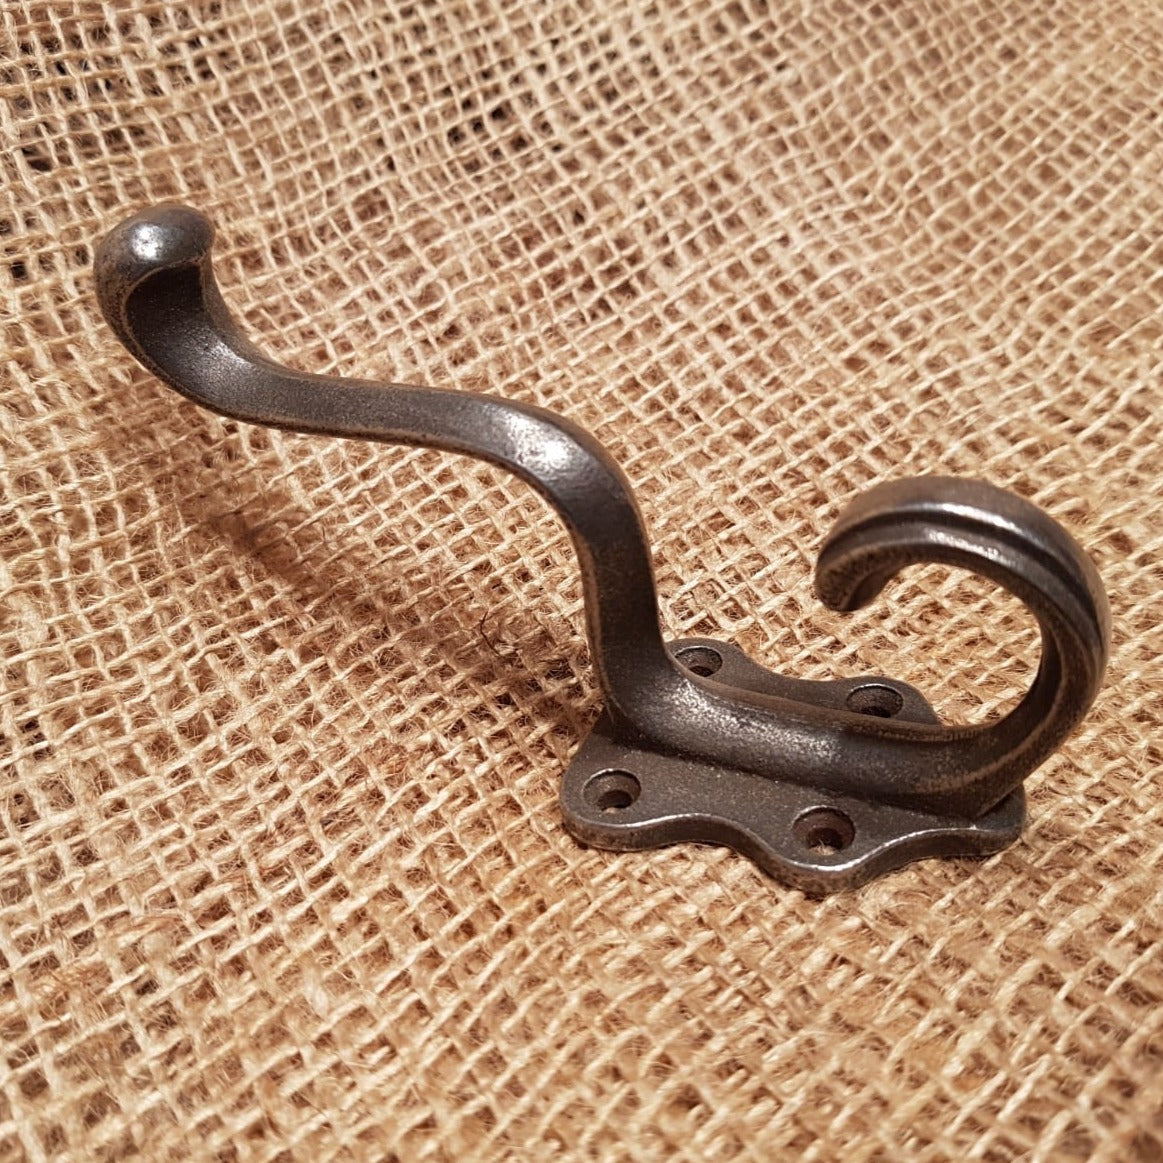 Cast Iron coat hook - VICTORIAN STYLE - Antique COPPER finish